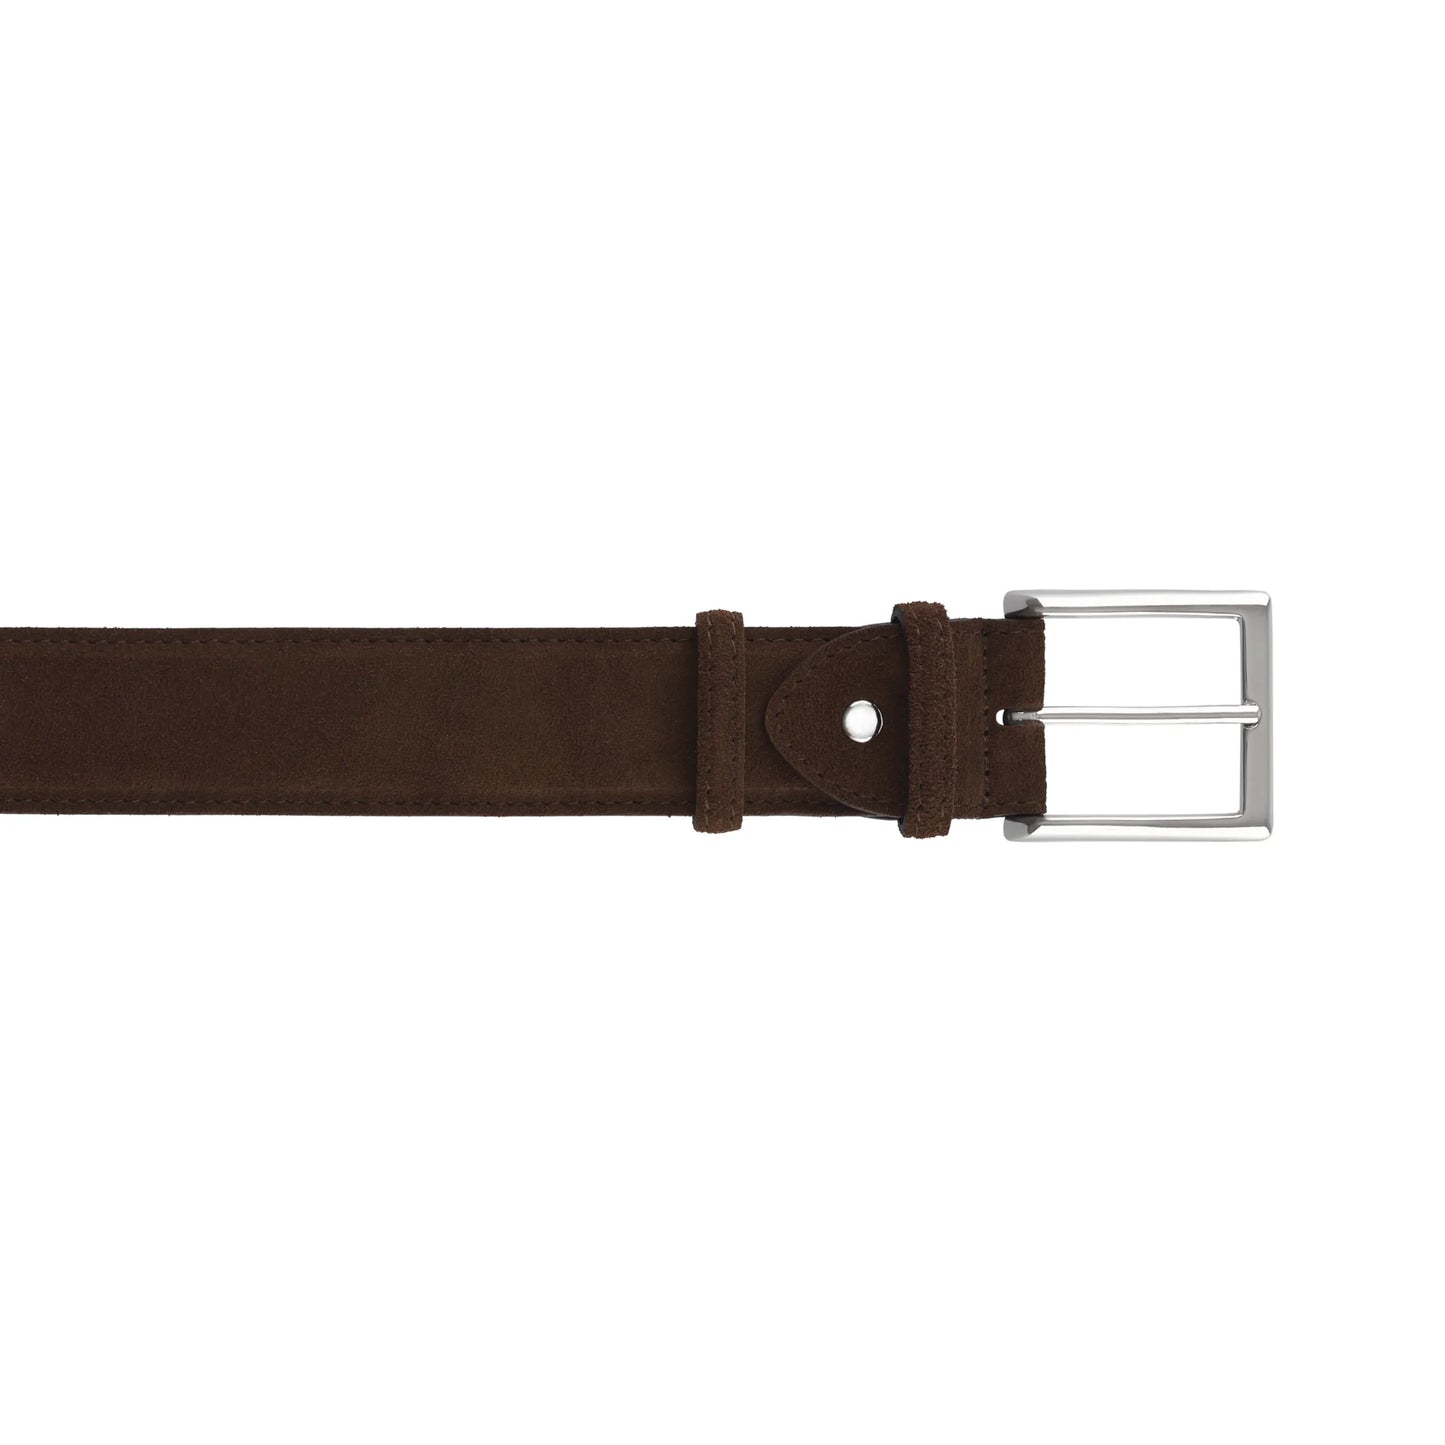 Bontoni Suede Leather Belt in Brown